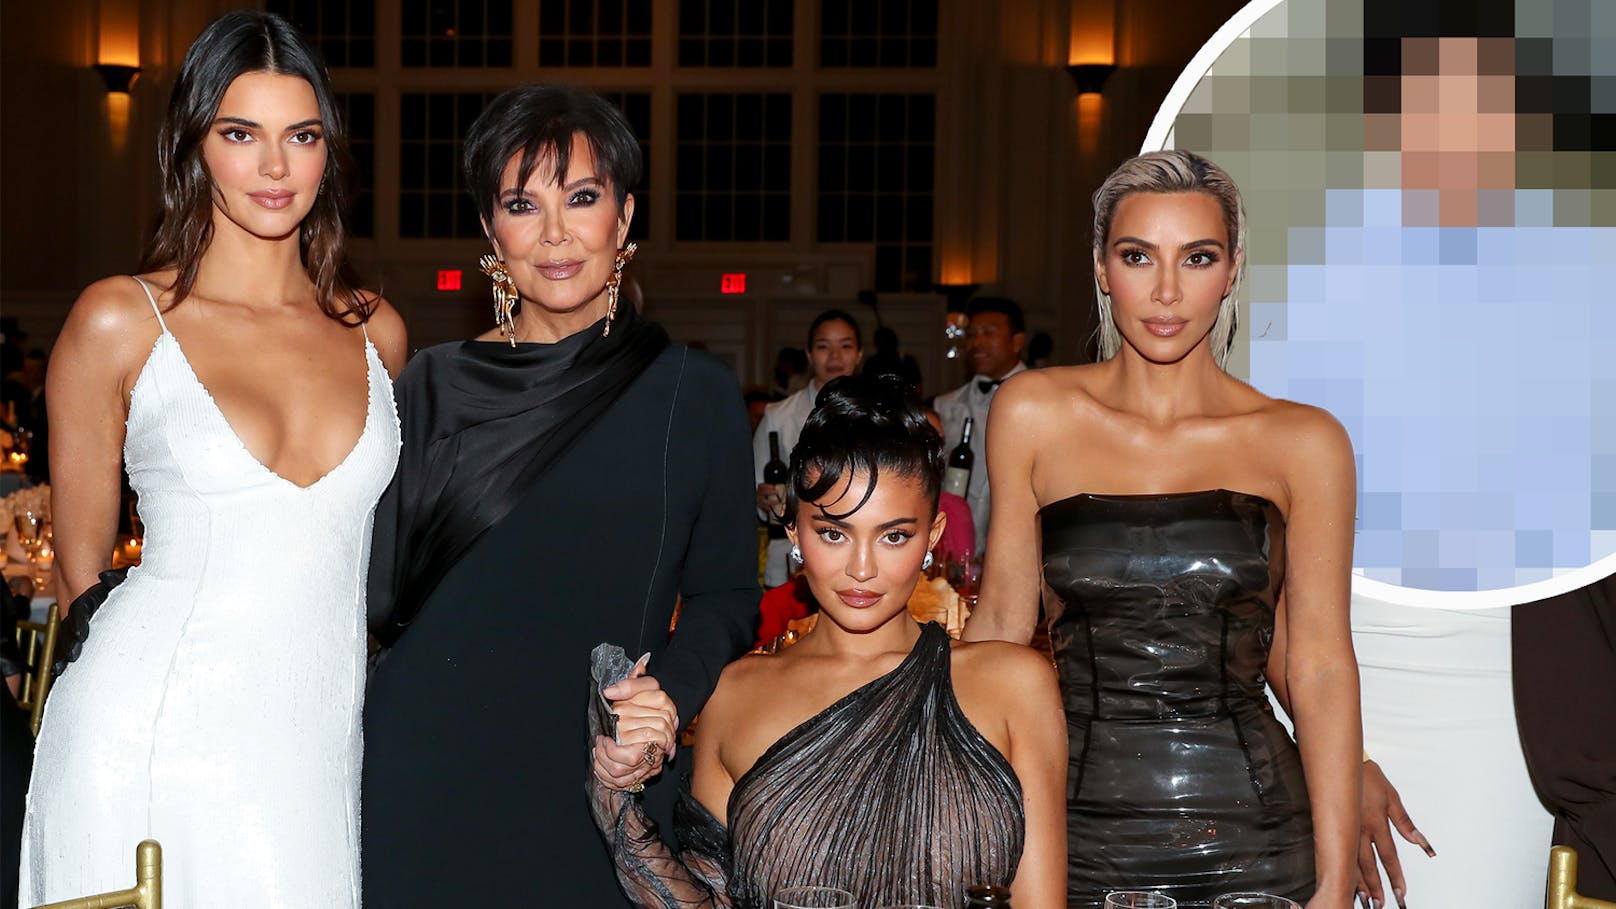 "KI-Hybrid" – Wirbel um Photoshop-Fail bei Kardashians